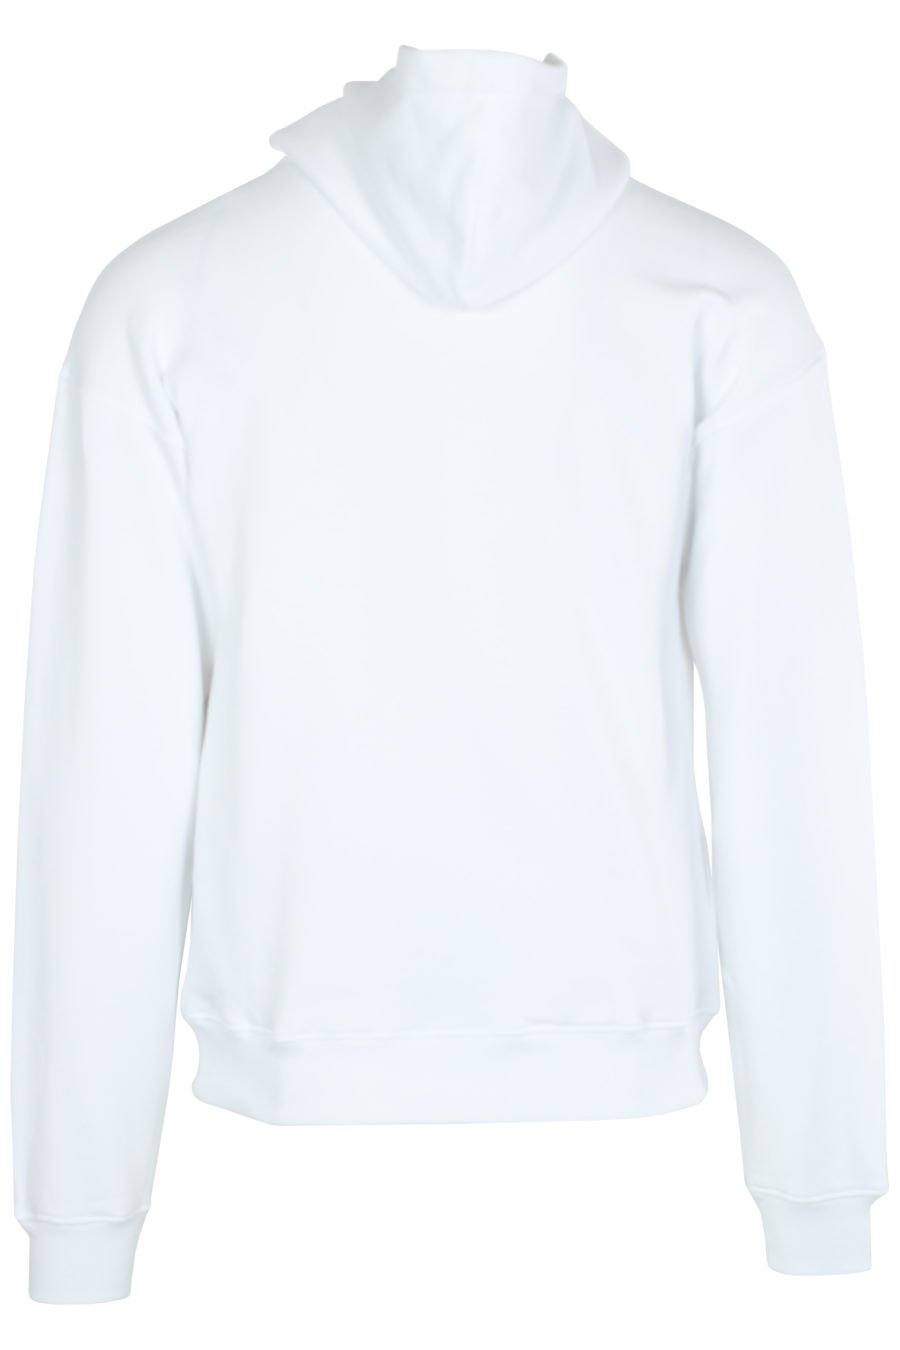 Sudadera blanca con capucha "Couture" - IMG 6225